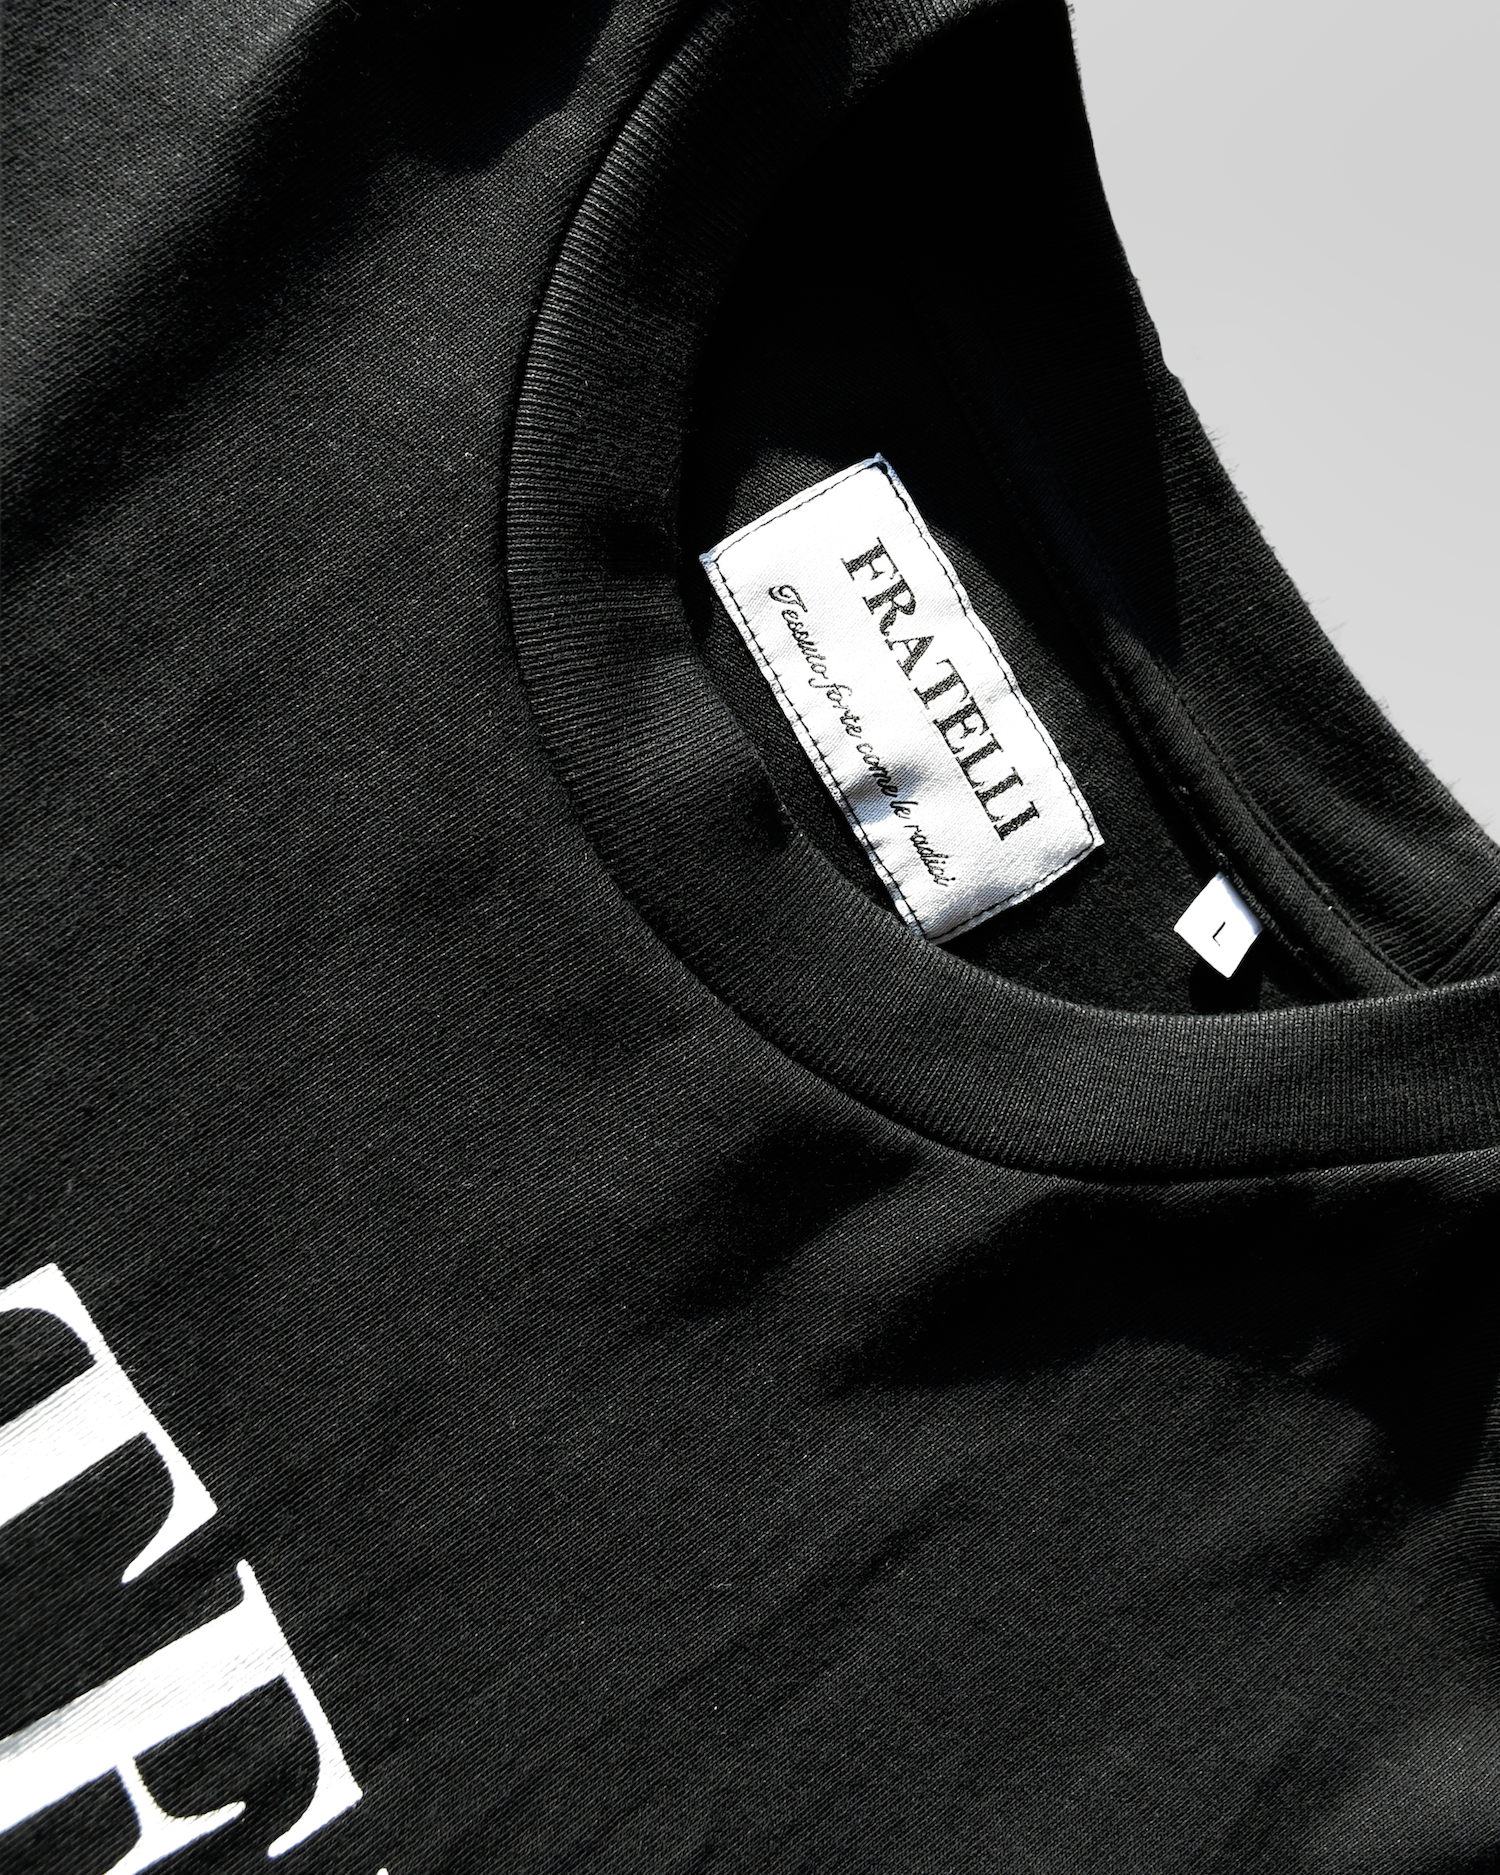 2FRATELLI Oversized front&back print T-Shirt black (unisex) - 2FRATELLI